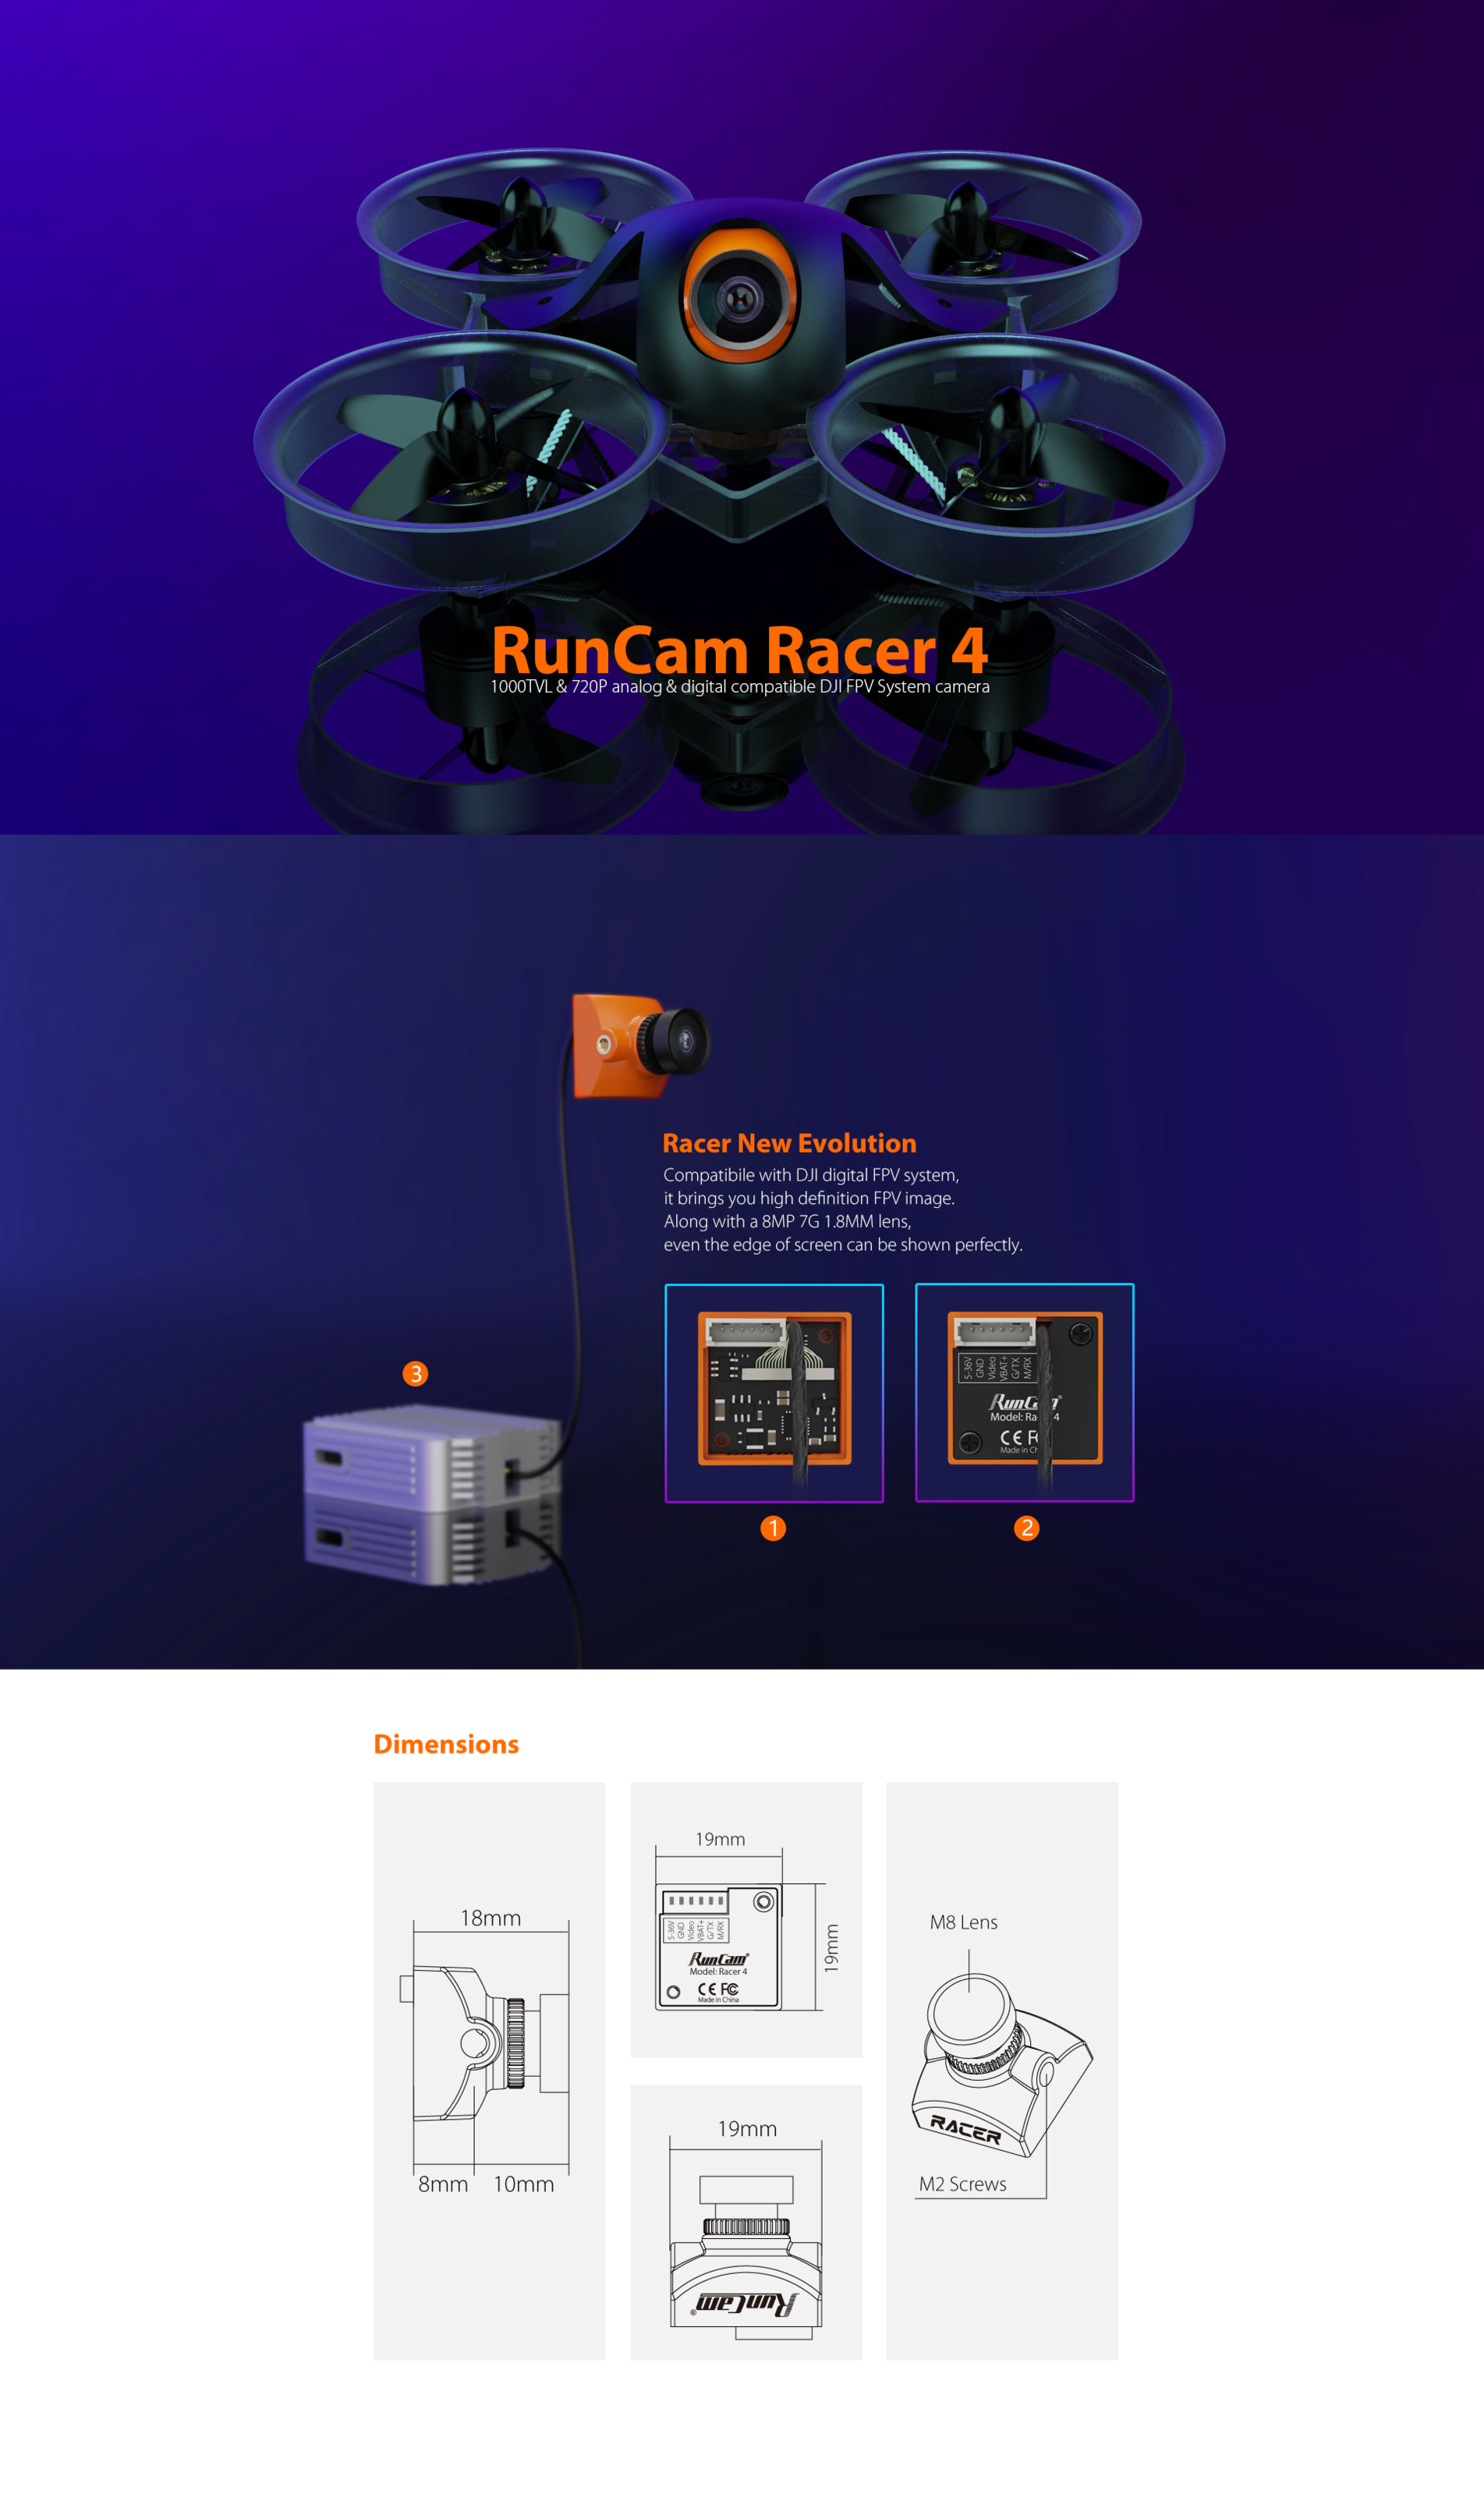 Runcam Racer 4 sold by PyroDrone